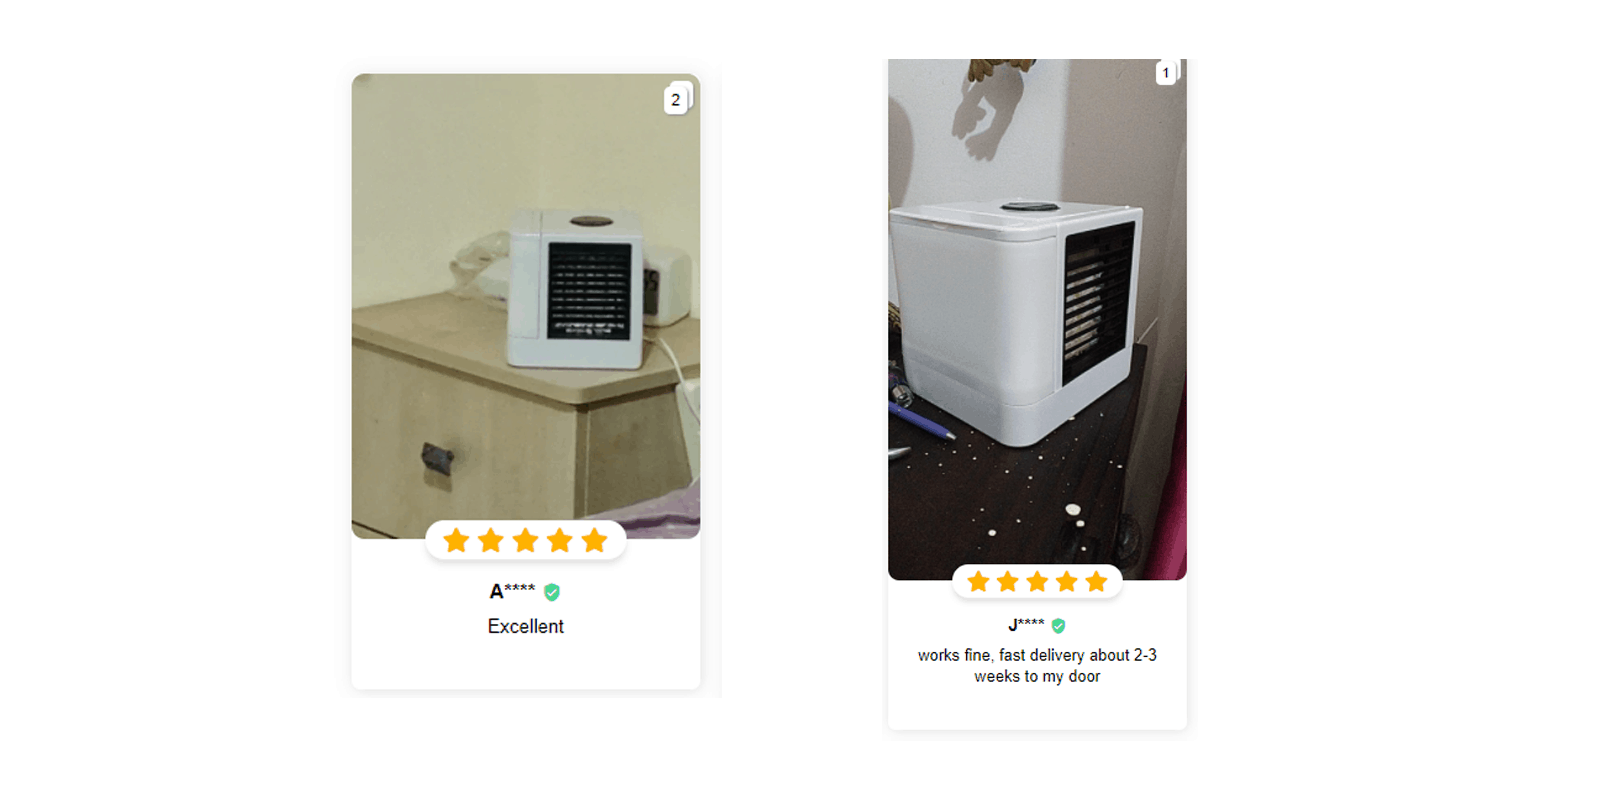 T10 Cooler customer reviews 